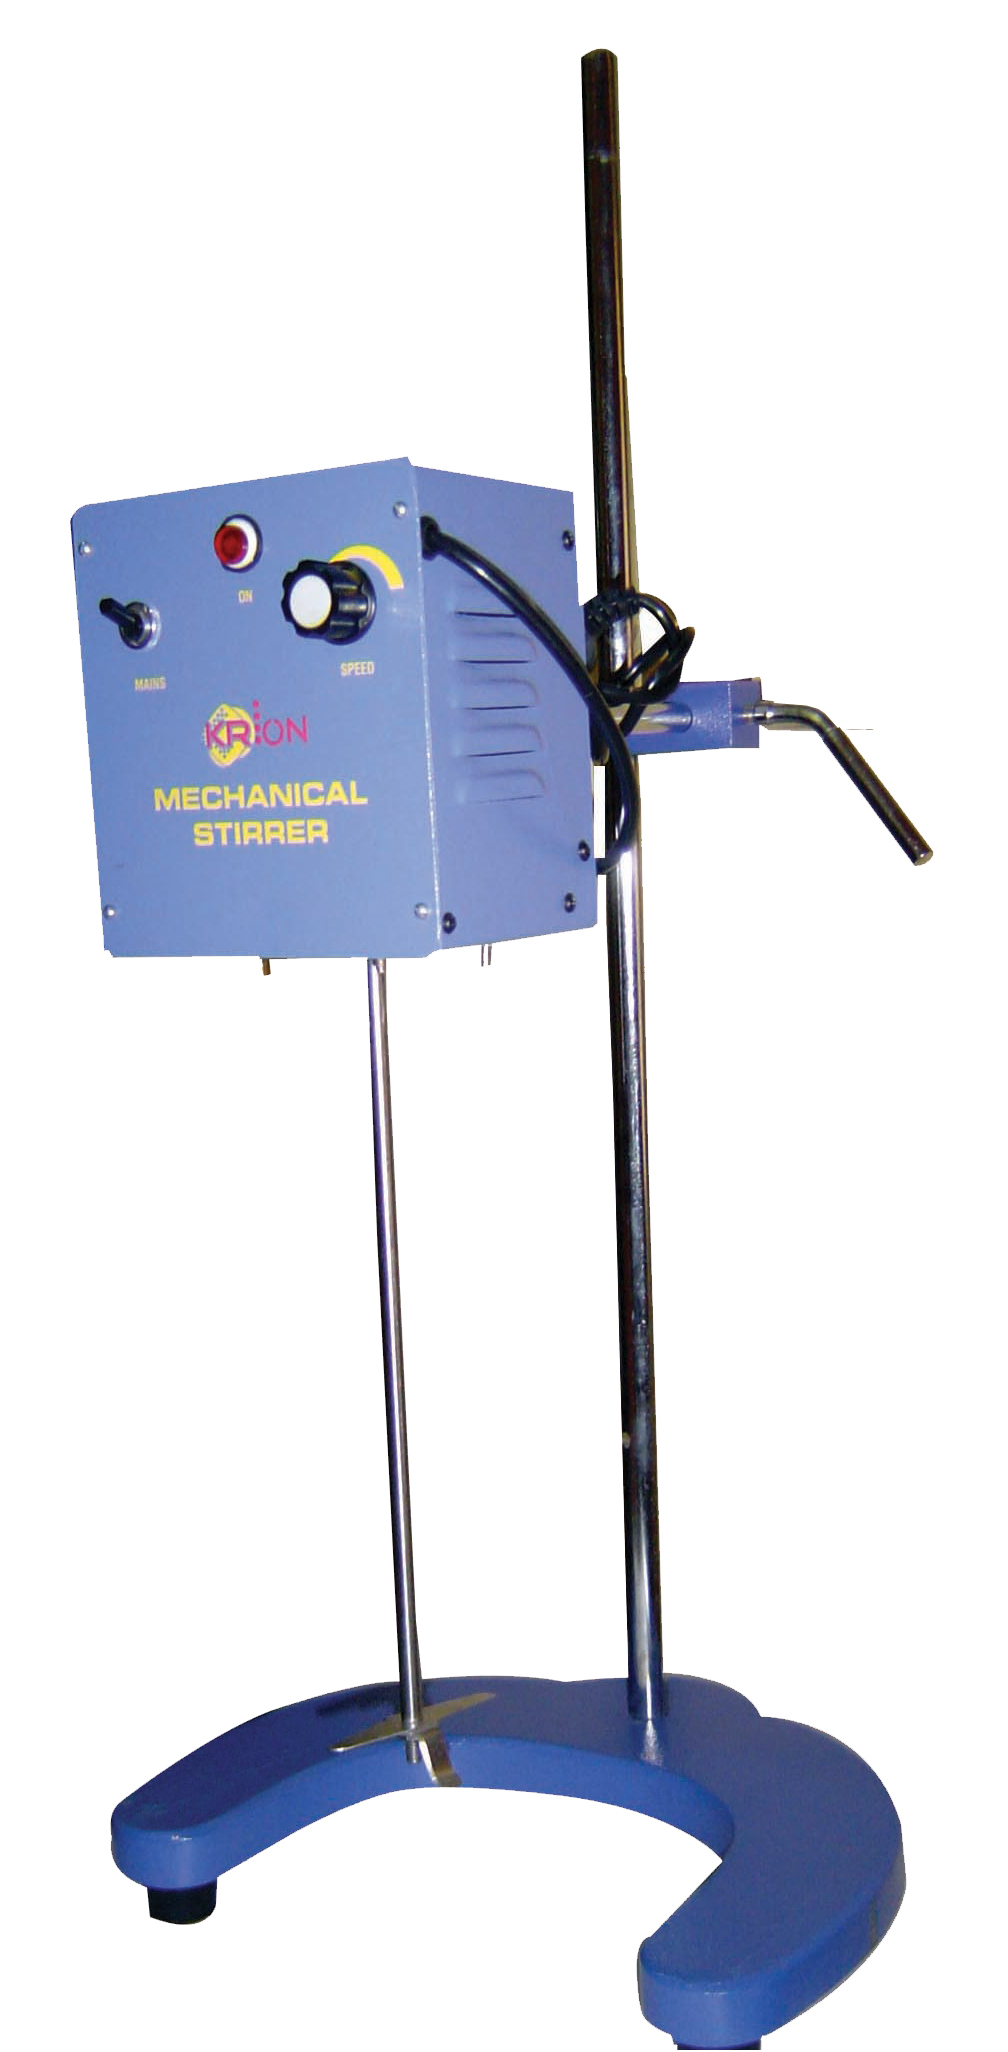  Mechanical Stirrers, Model No.: KI- 2138